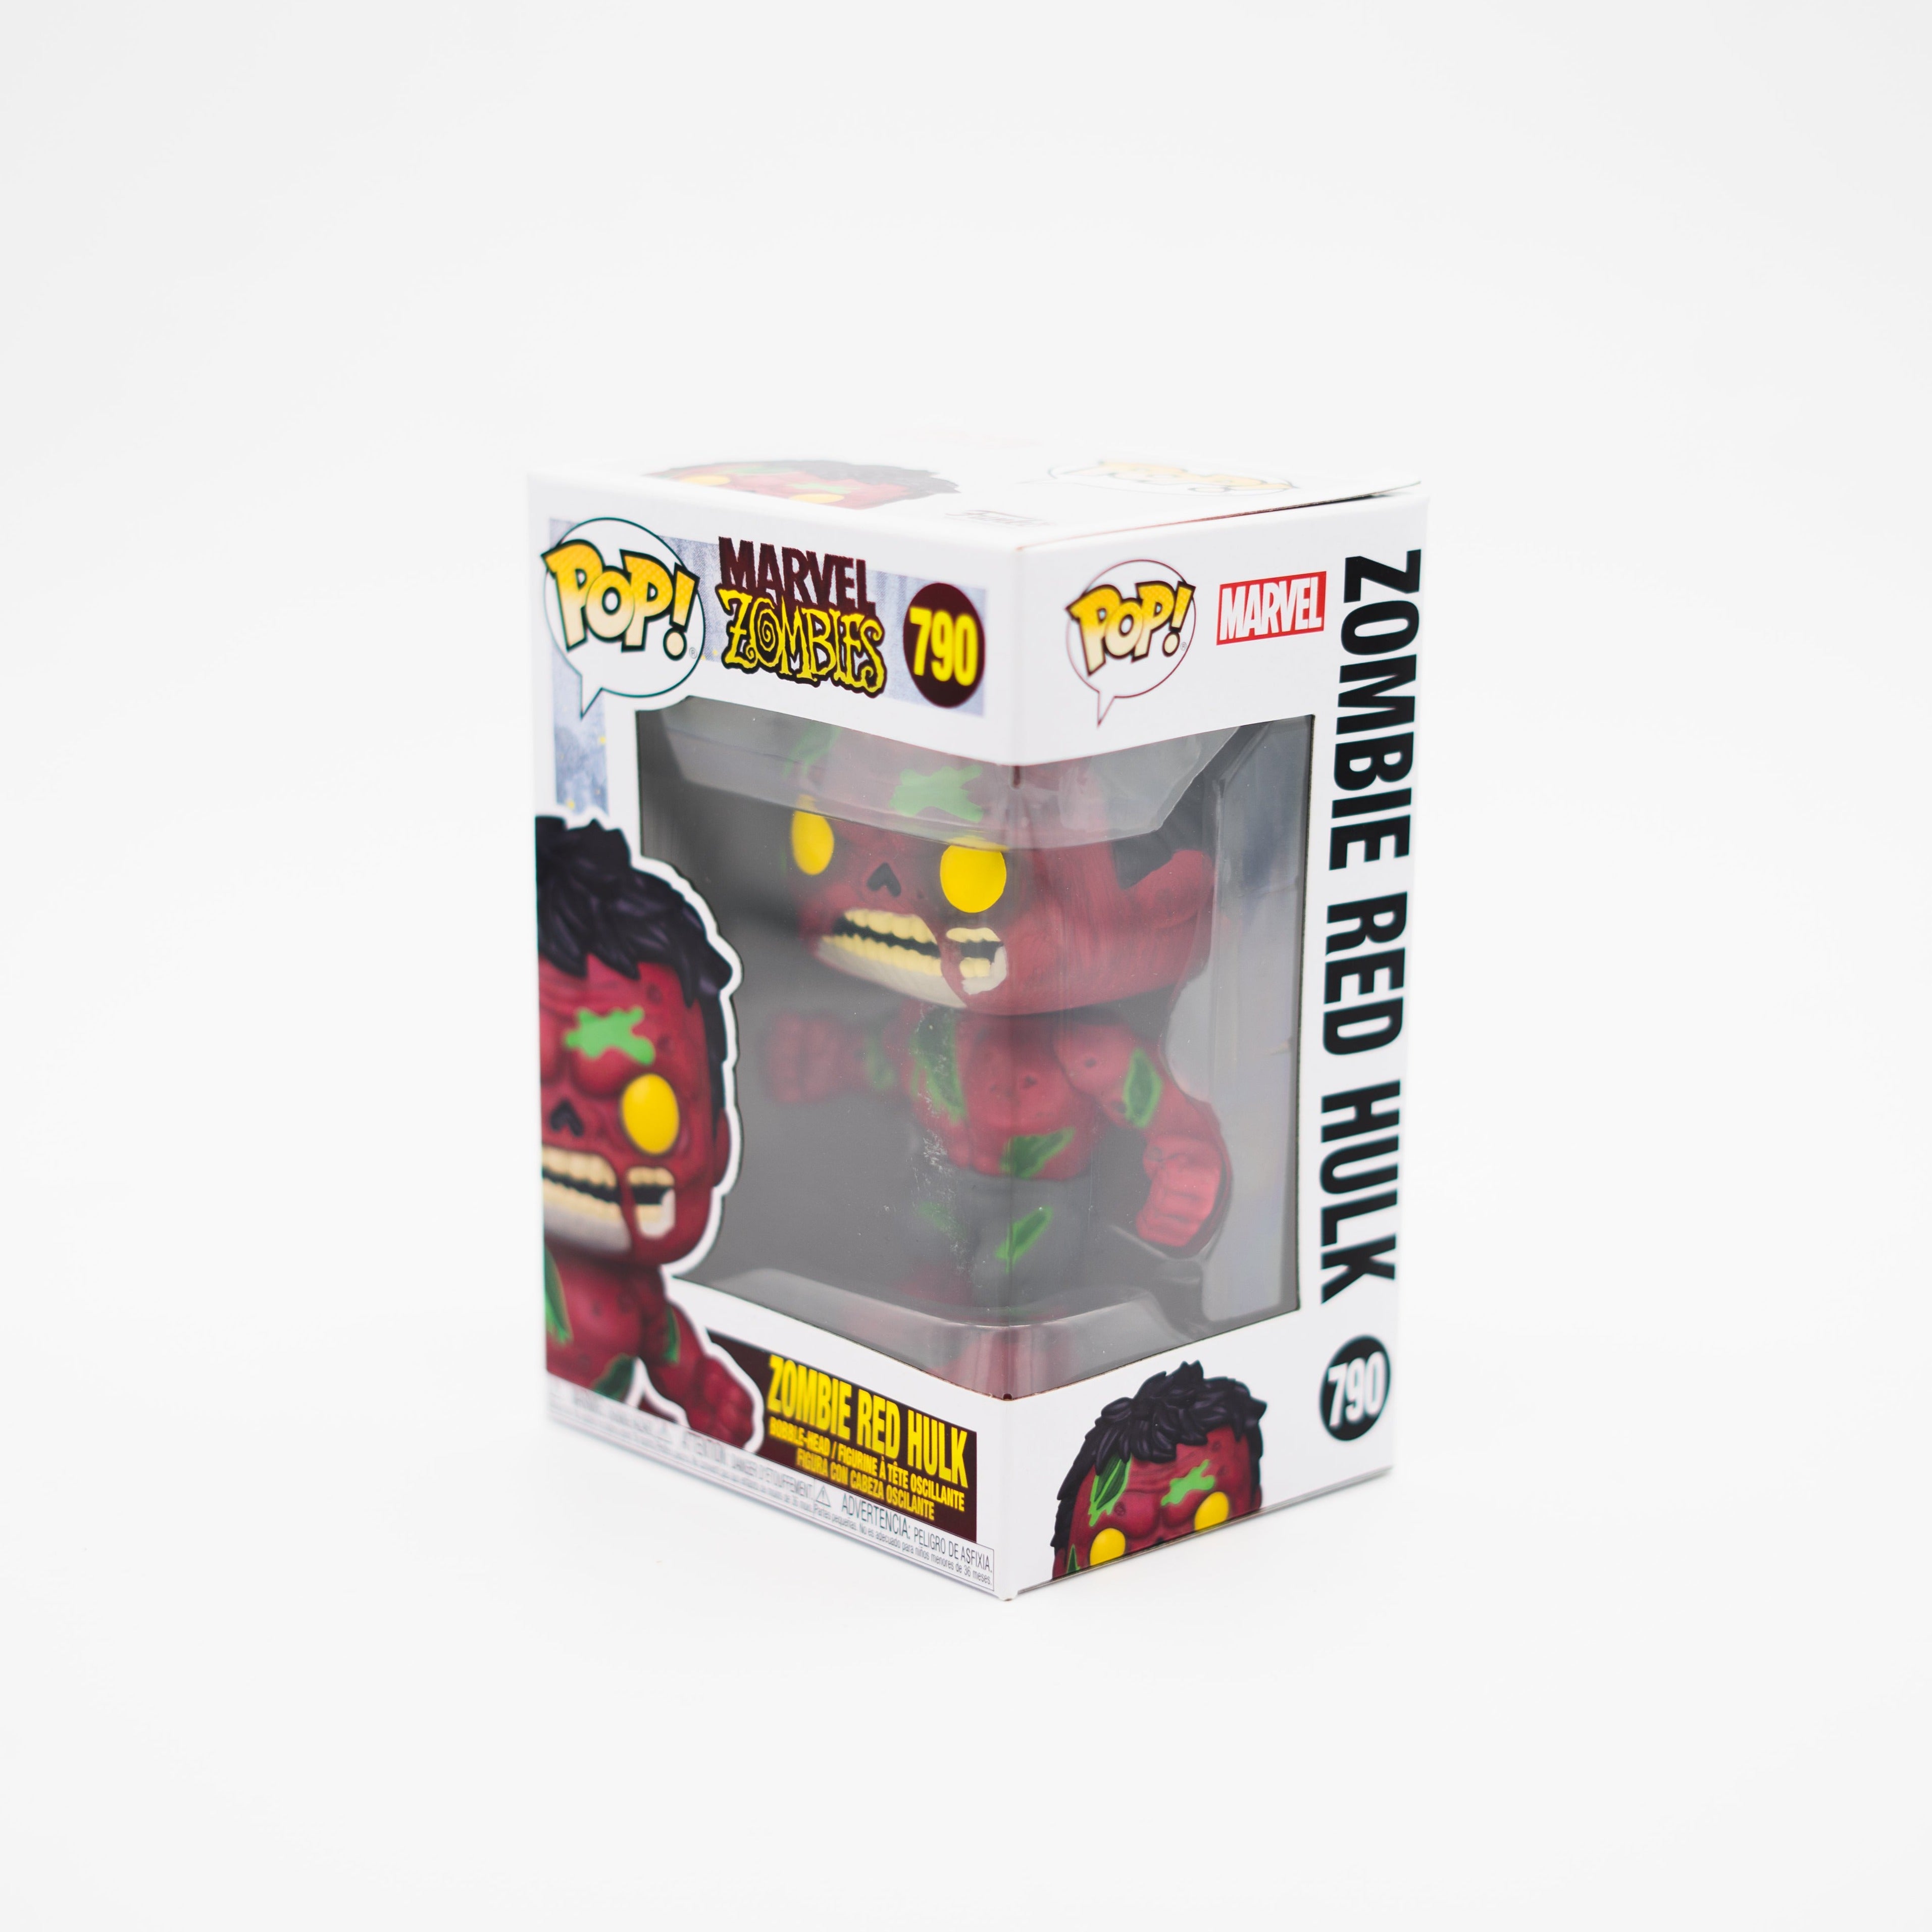 Funko Pop! Zombie Red Hulk #790